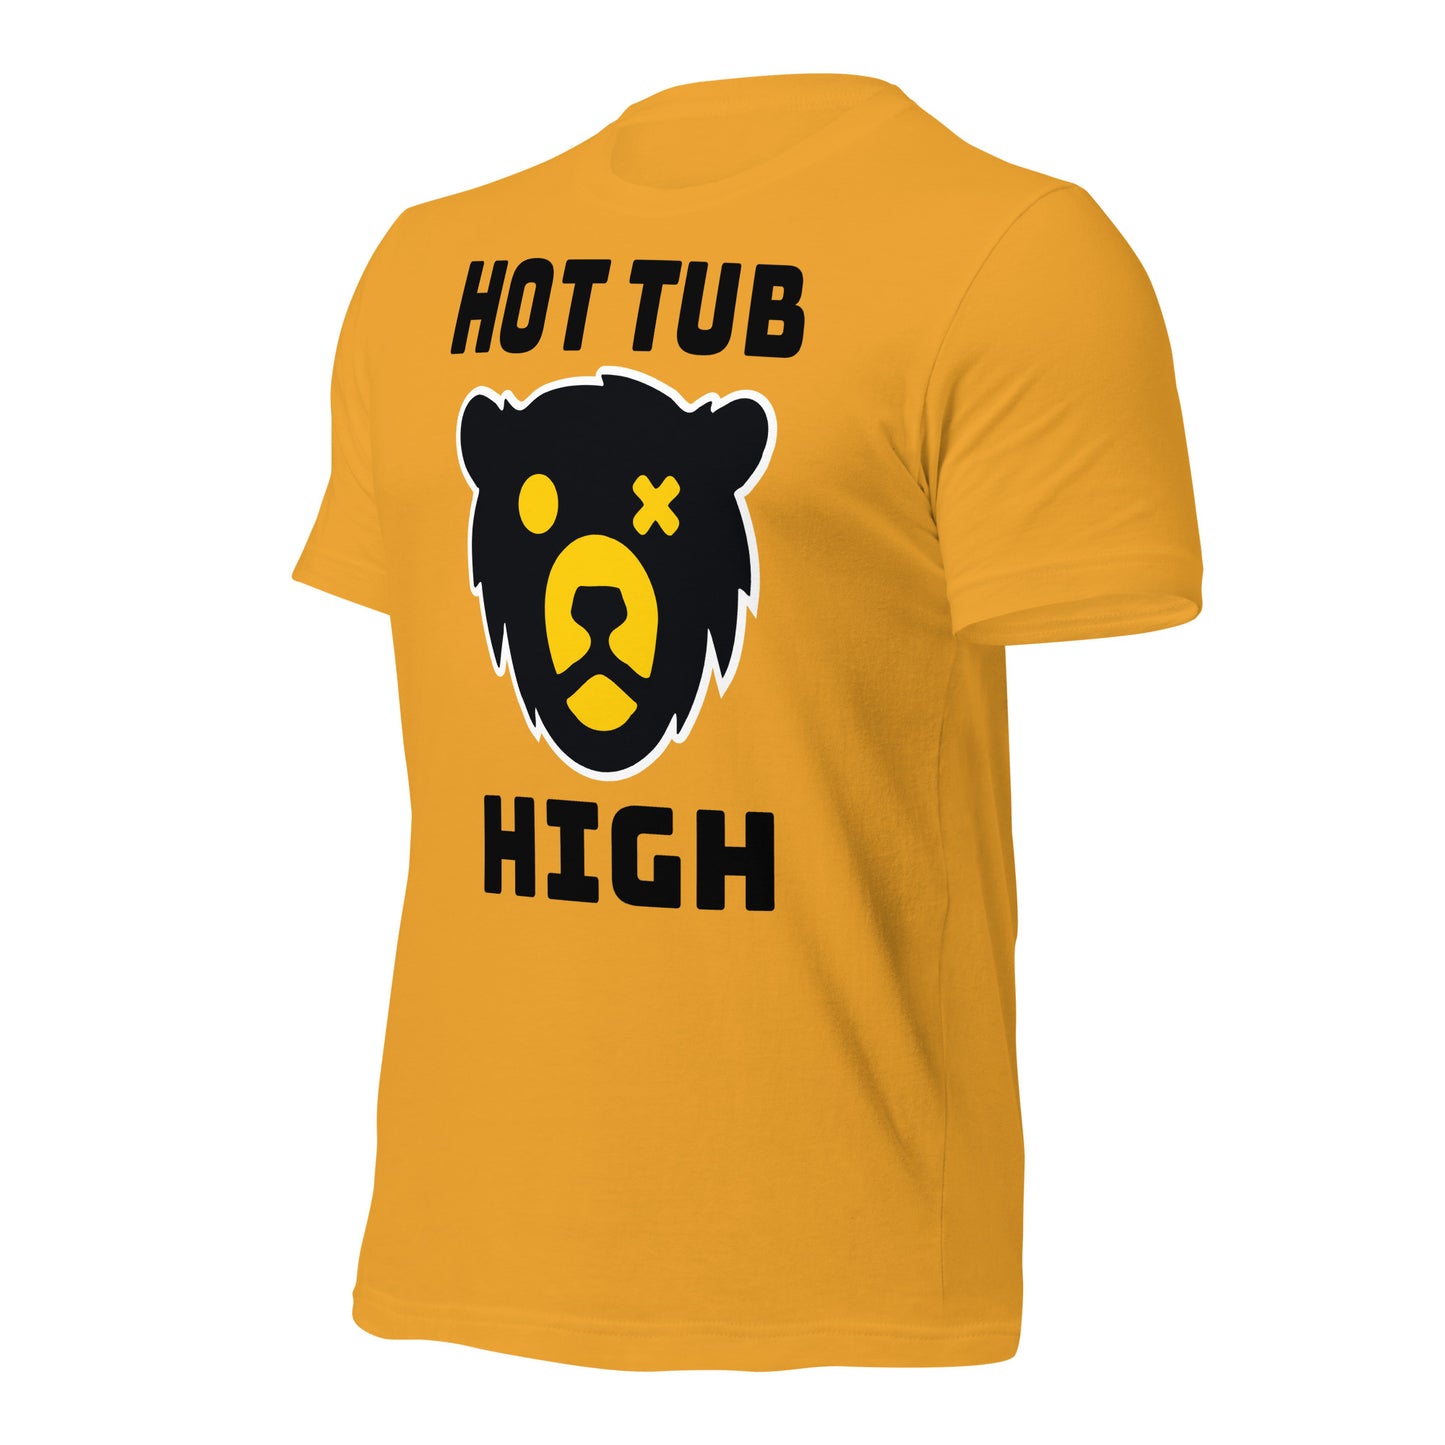 HOT TUB HIGH BLACK FONT - BELLA+CANVAS - Unisex t-shirt